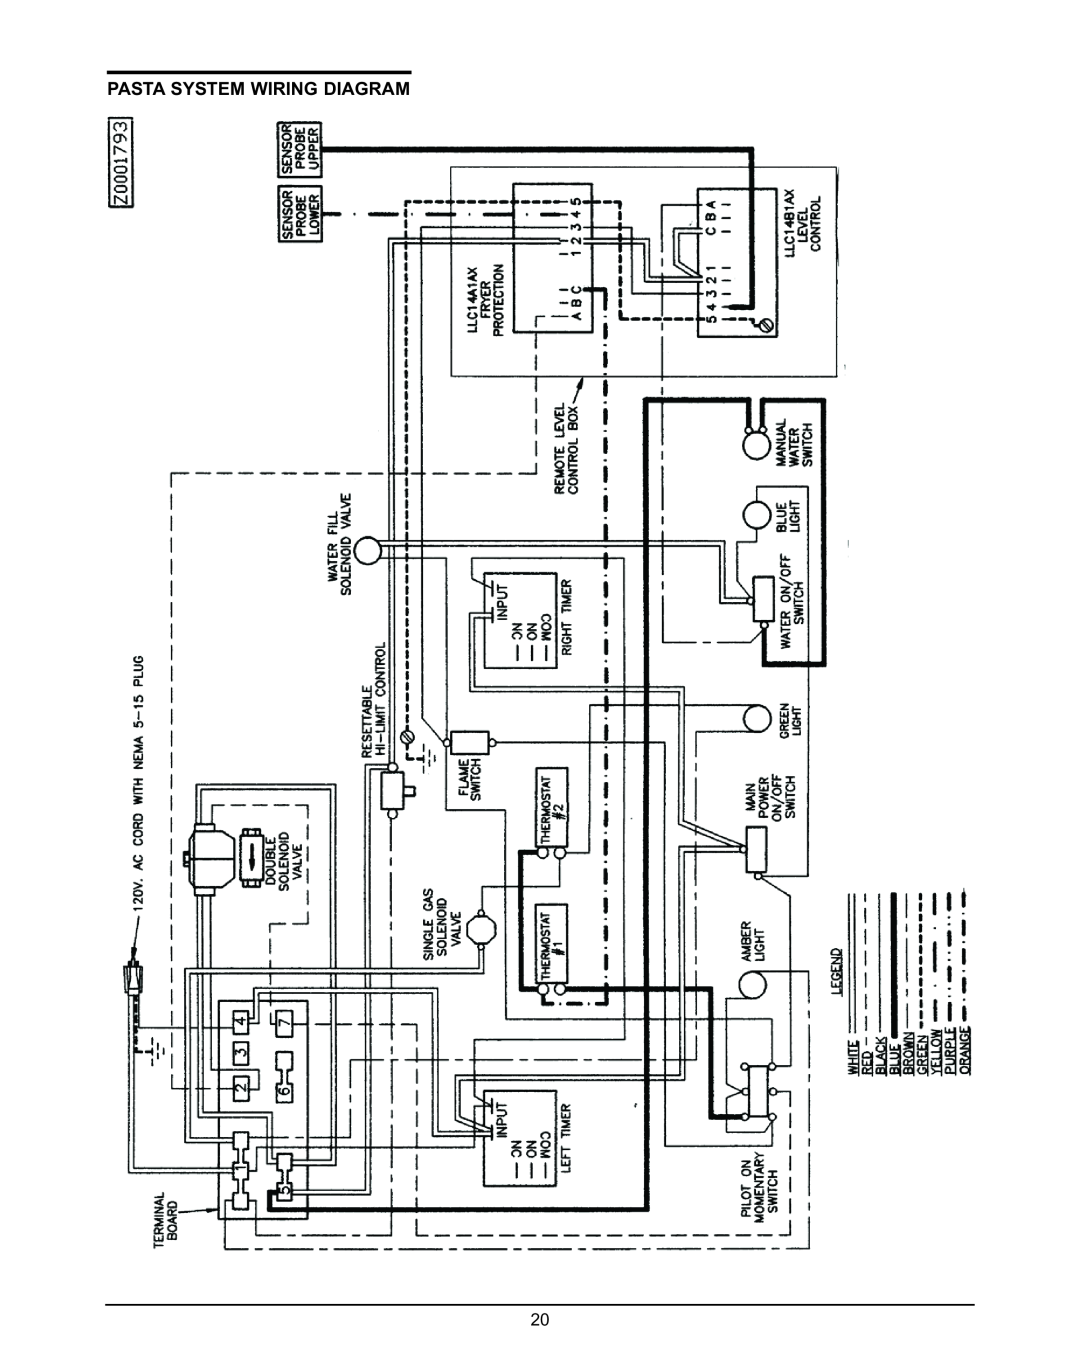 Keating Of Chicago Gas Custom Pasta System manual Pasta System Wiring Diagram 